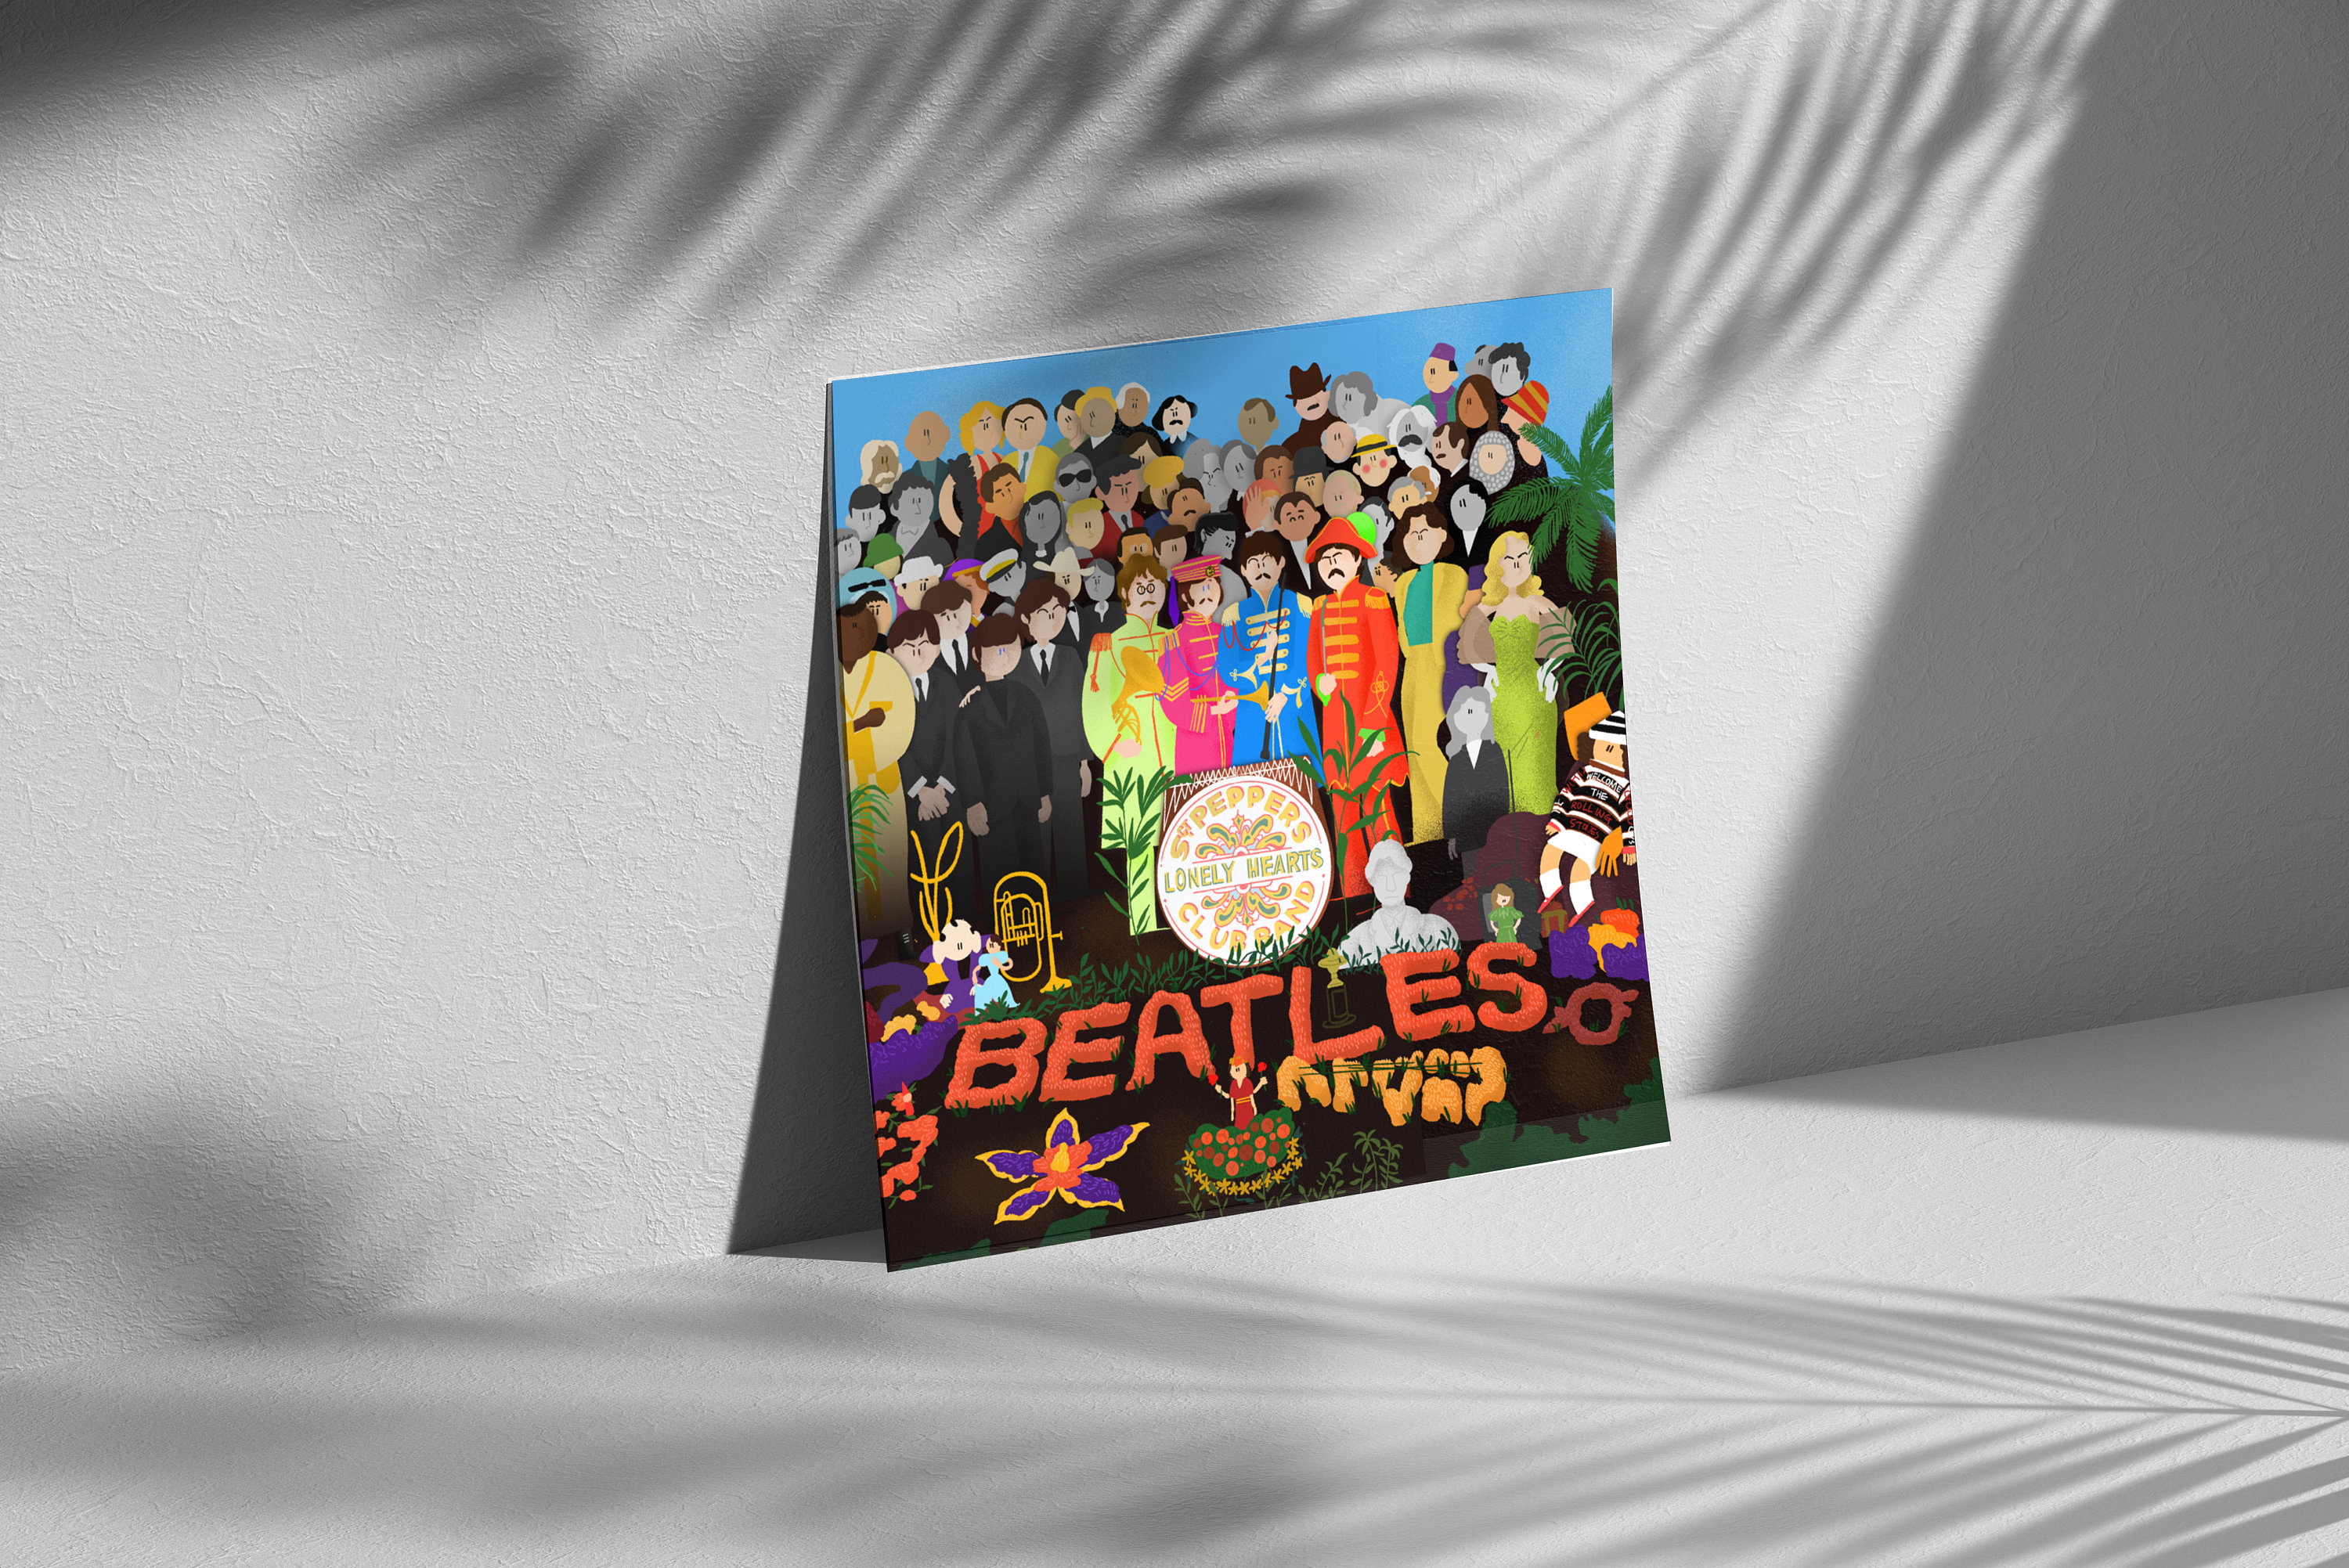 Sgt Pepper Poster - Etsy